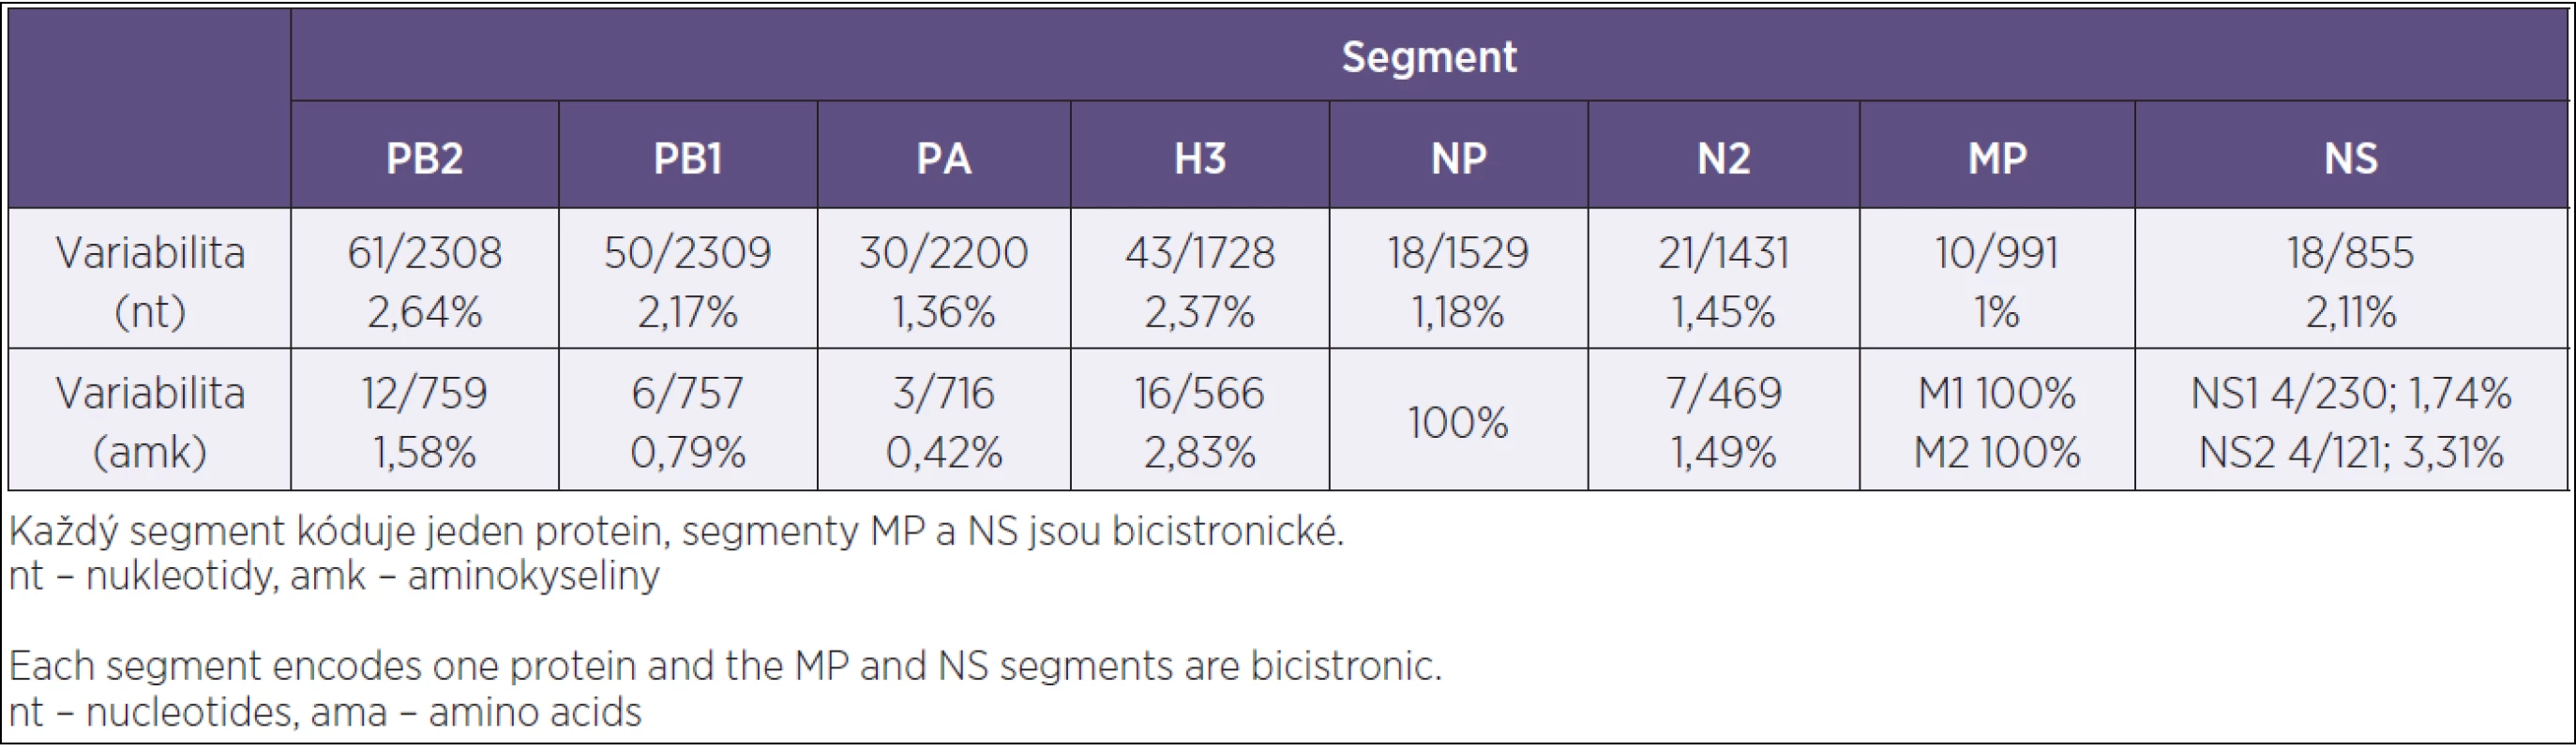 Sekvenční variabilita analyzovaných kmenů chřipky A/H3N2 na nukleotidové a aminokyselinové úrovni v absolutních a procentuálních hodnotách
Table 2. Sequence variability in A/H3N2 influenza strains at the nucleotide and amino acid level given in the absolute and percent values